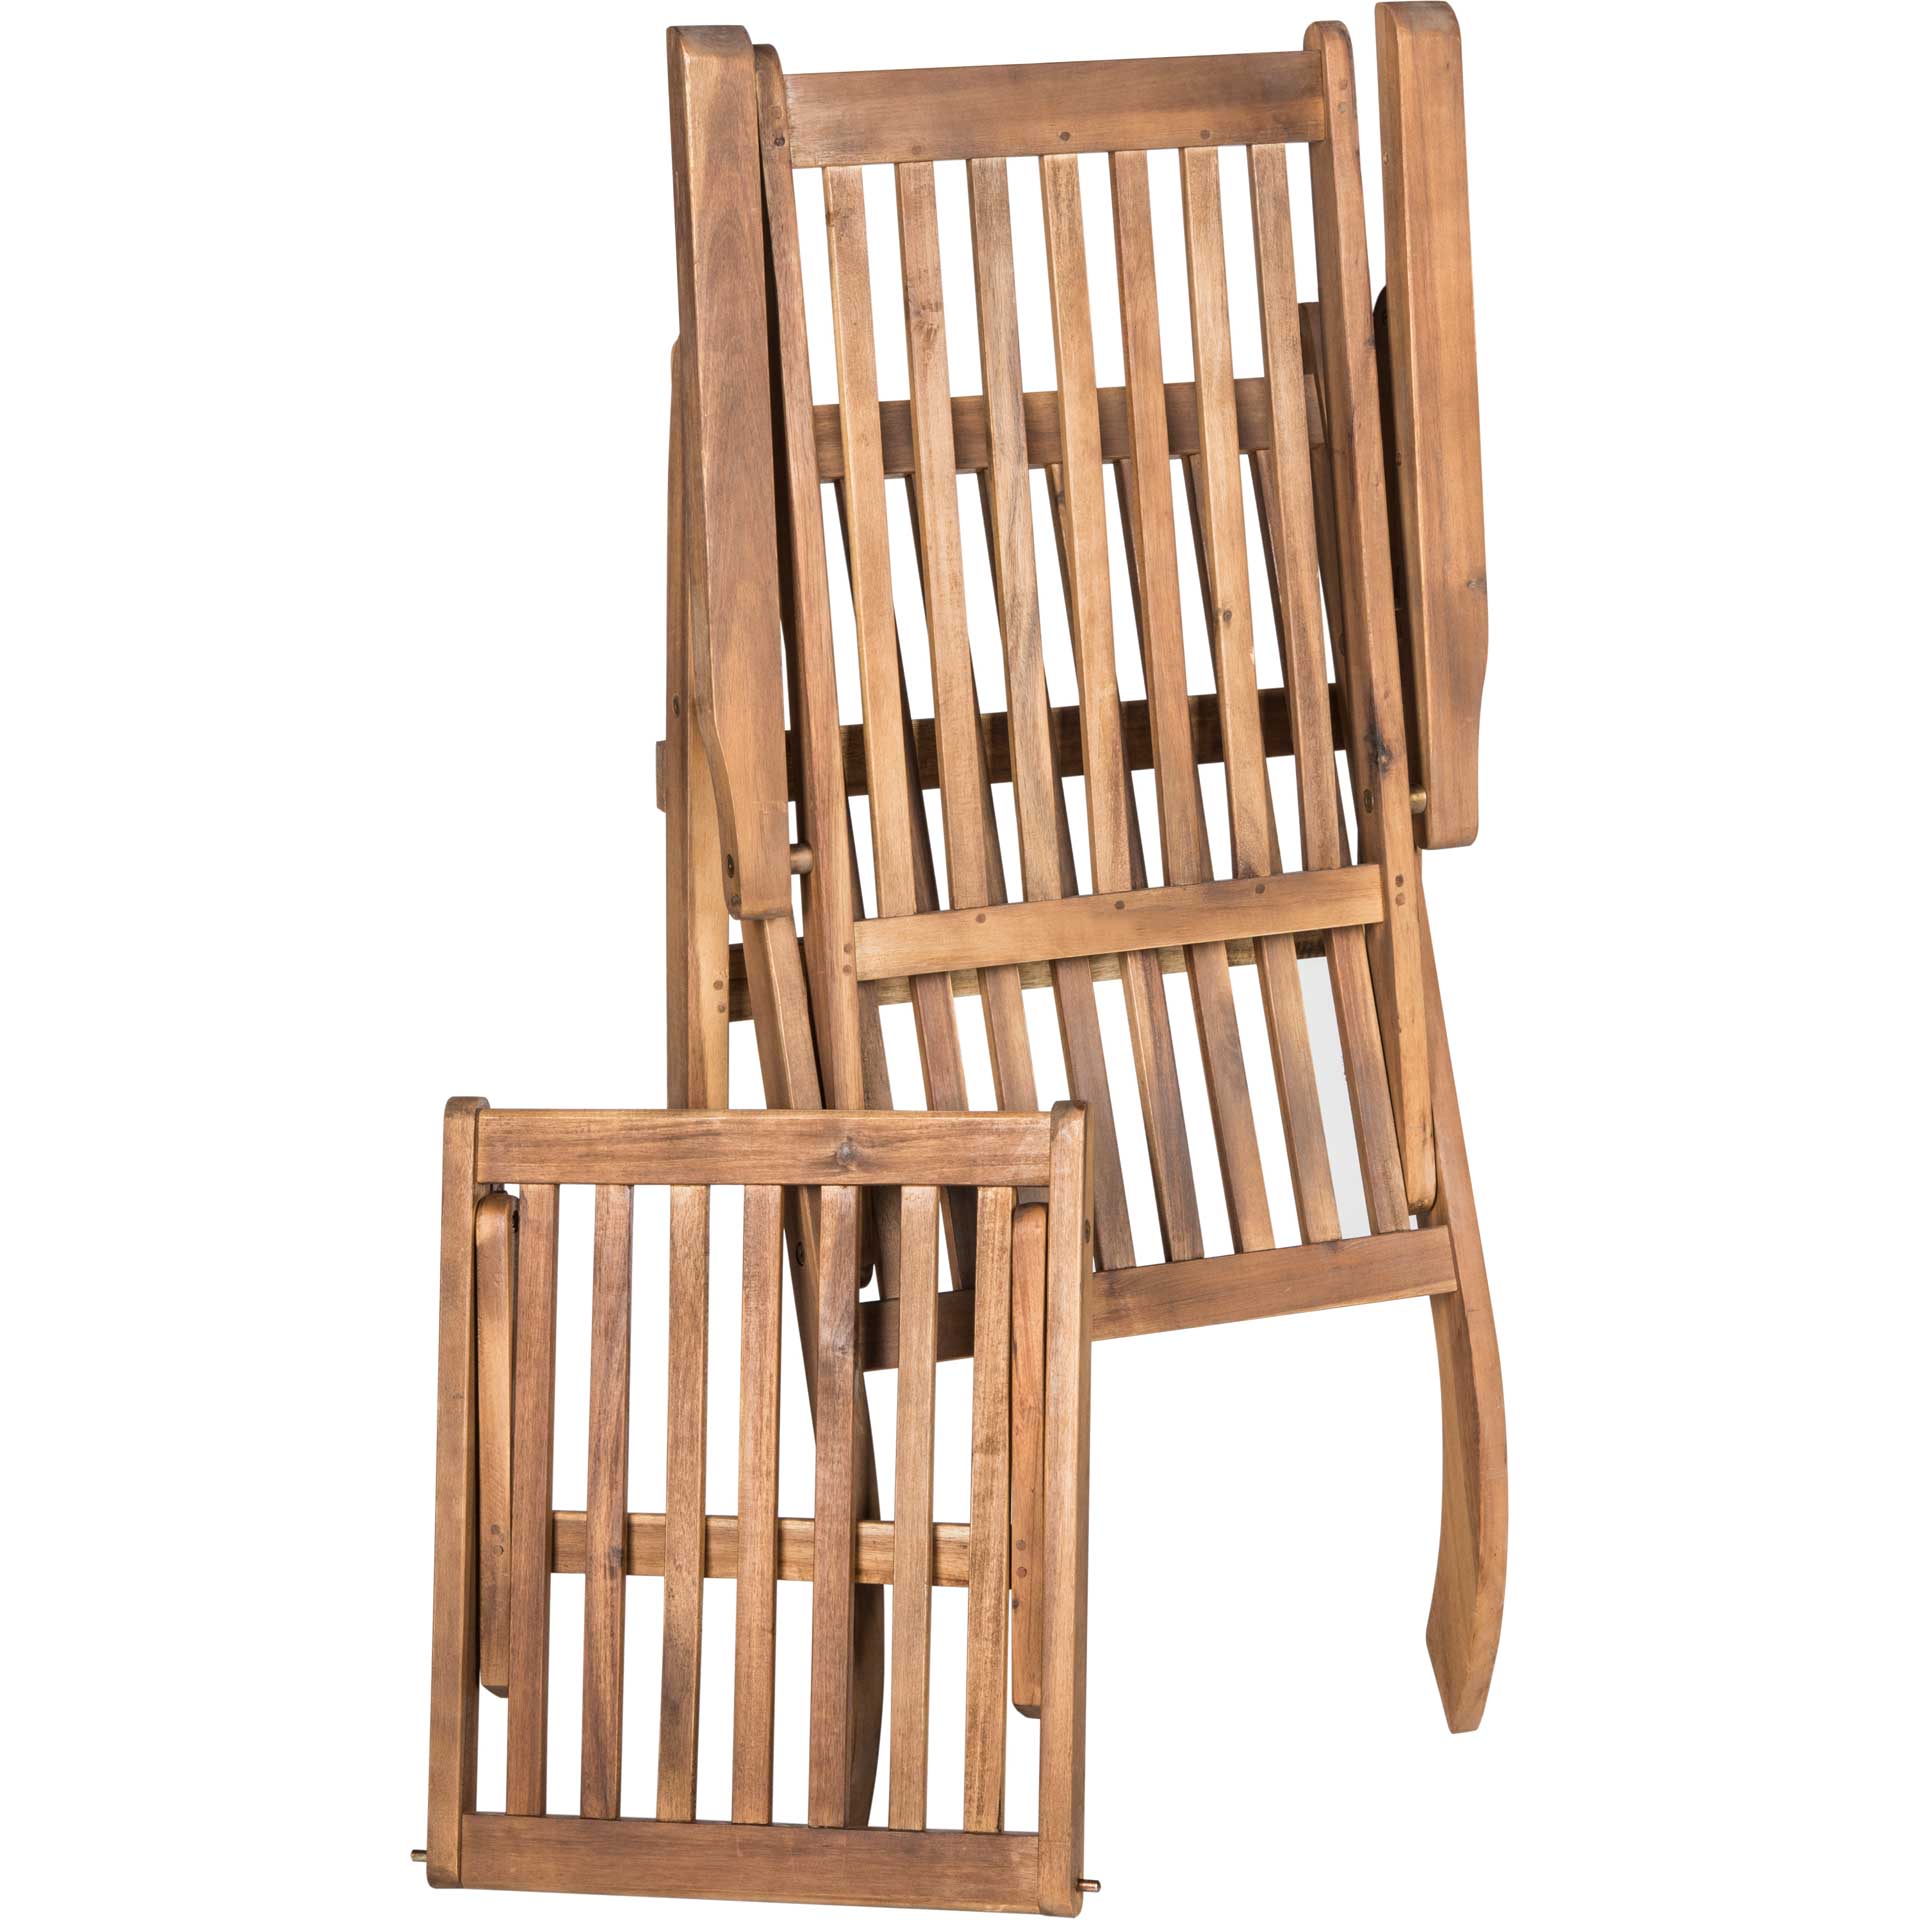 Palm Lounge Chair Teak Brown/Navy